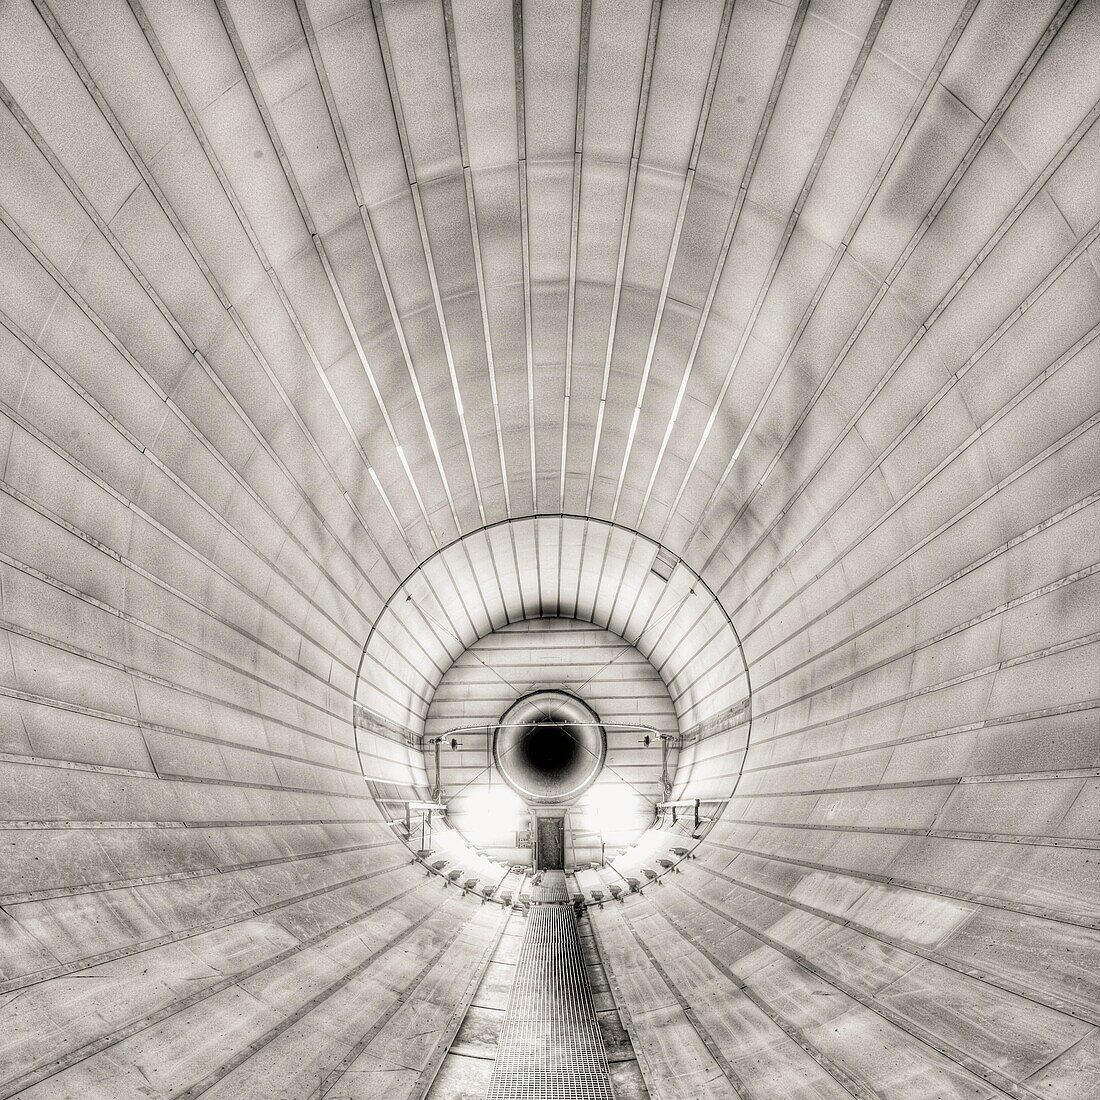 Wind tunnel